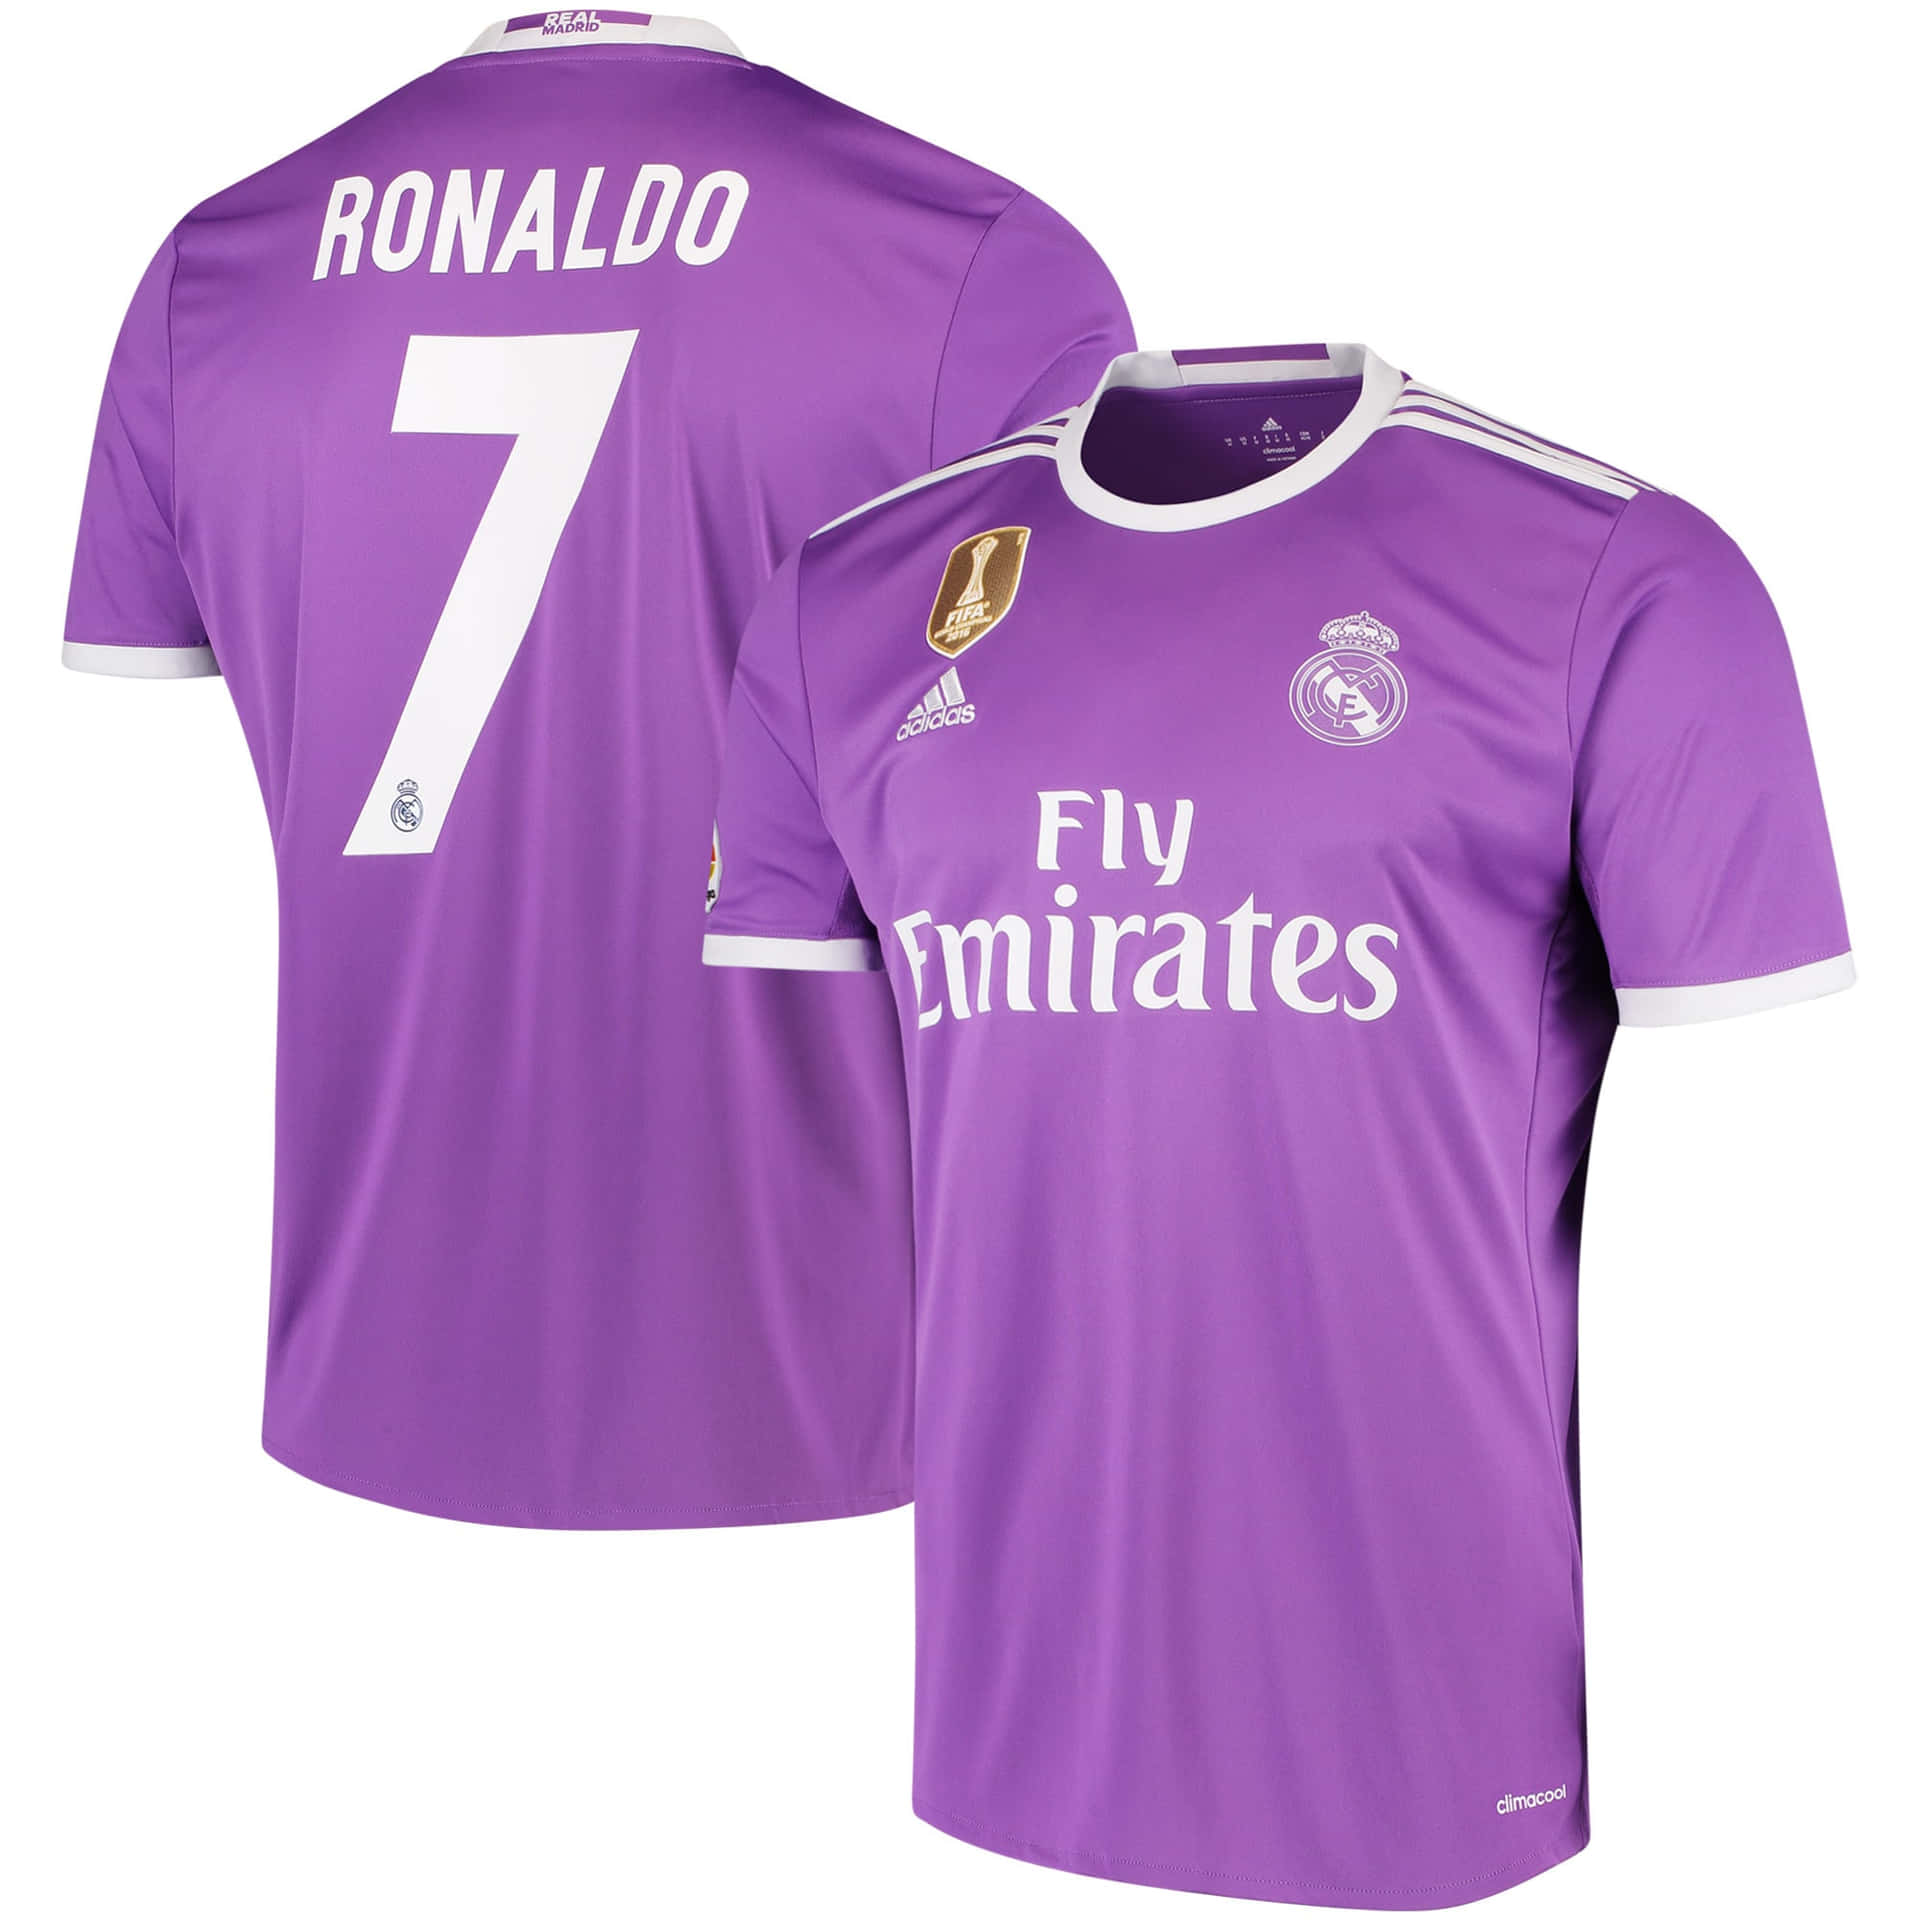 Purple Ronaldo Number7 Jersey Wallpaper